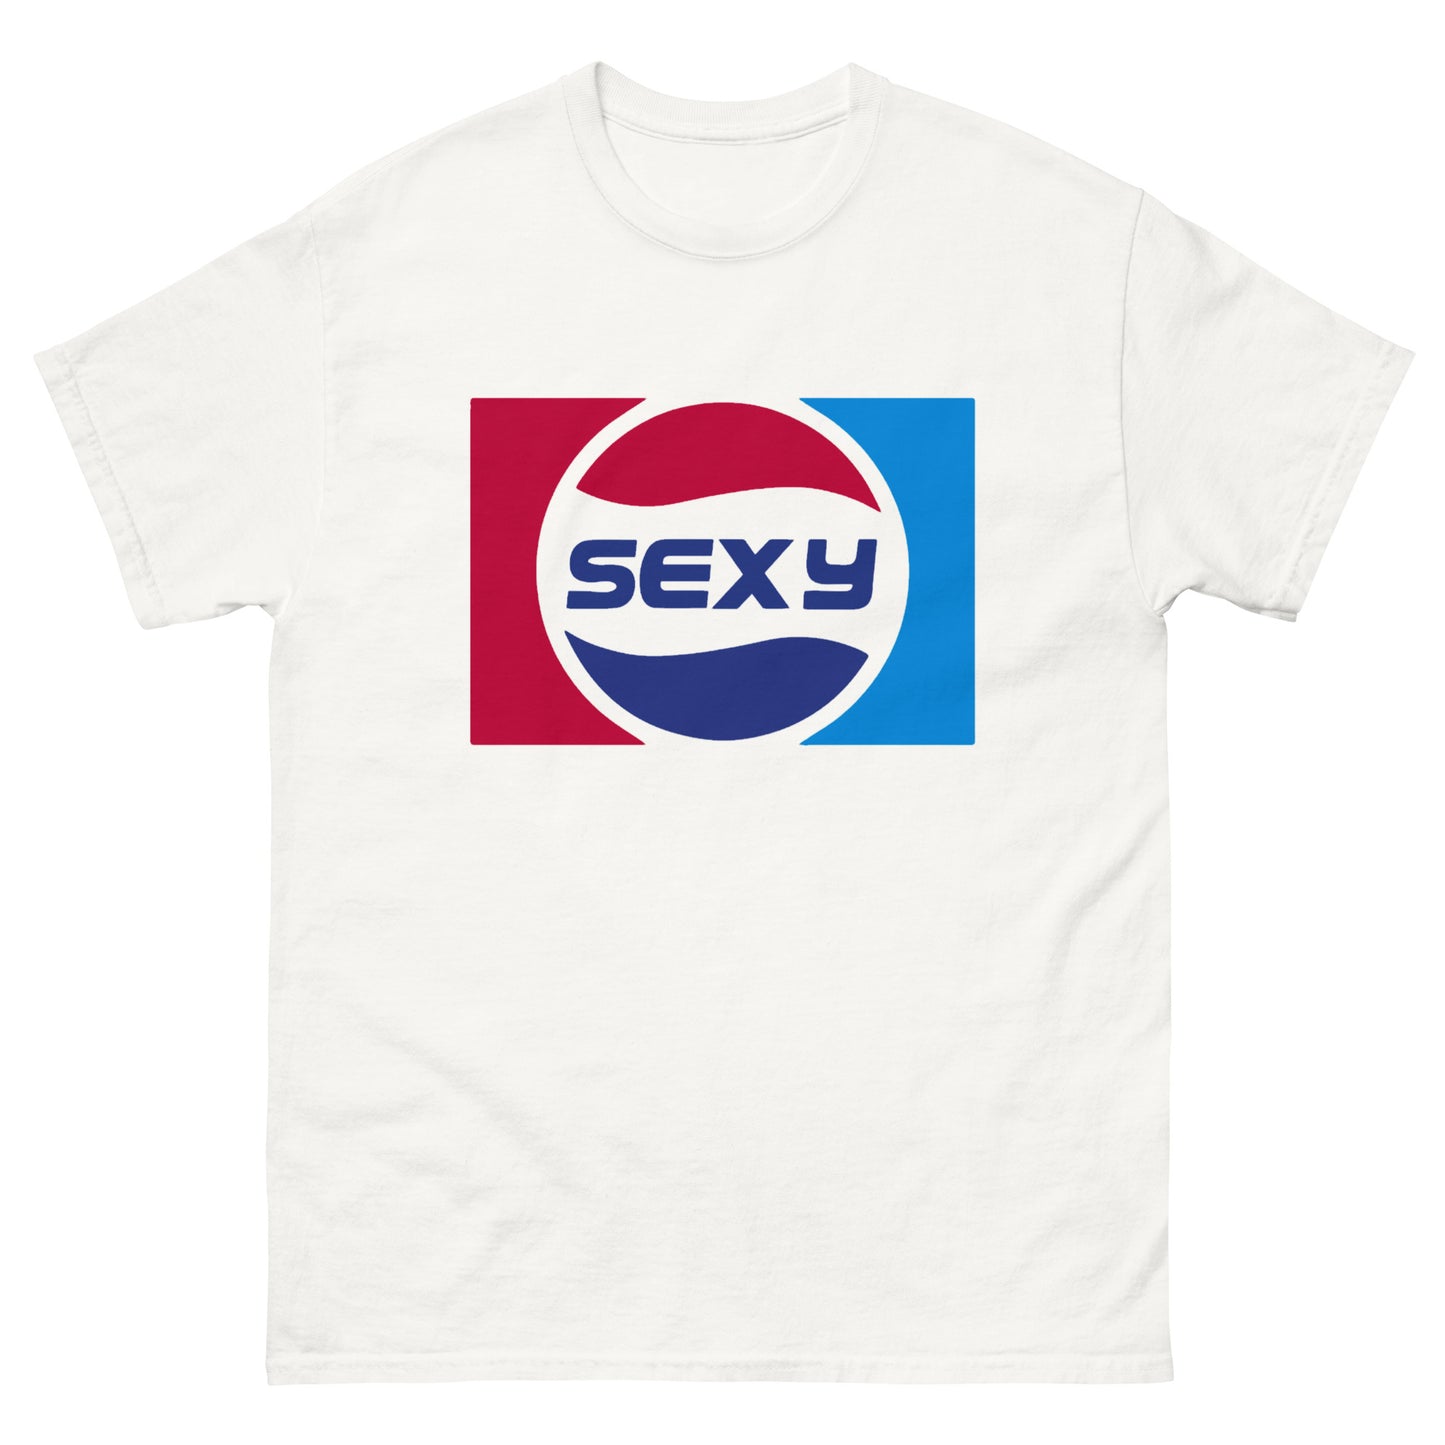 Sexy T-Shirt